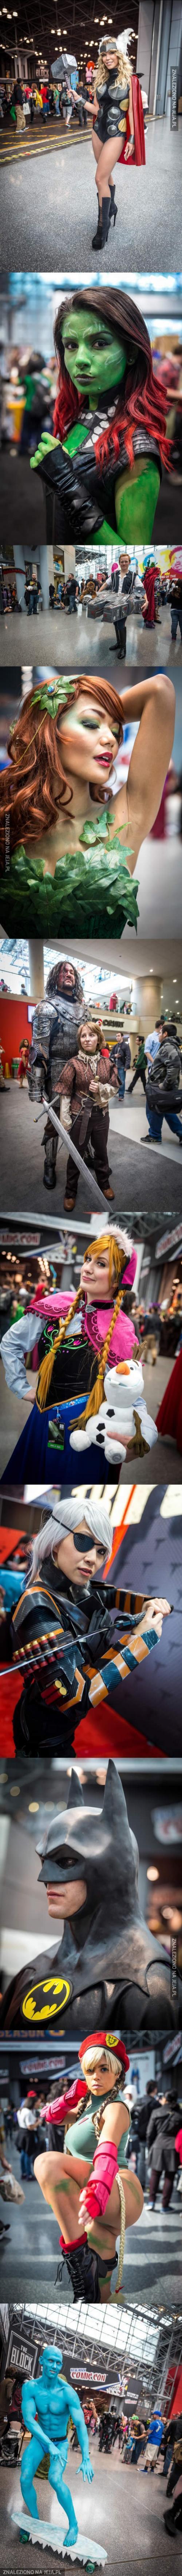 Niesamowite cosplaye z Comic Conu